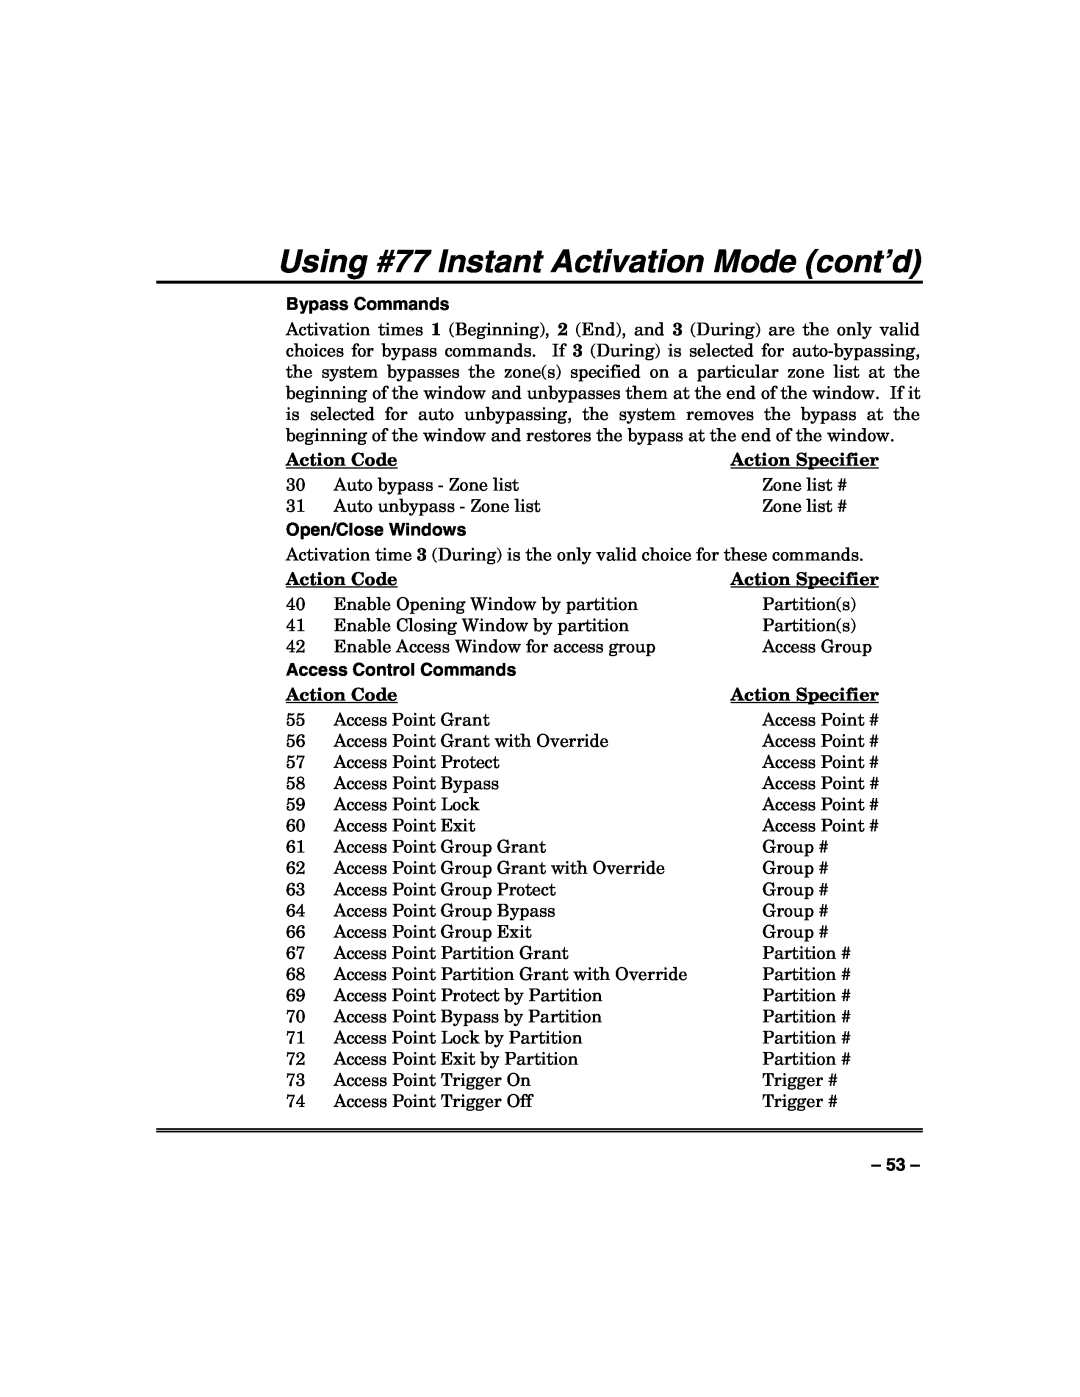 Honeywell VISTA-128FBP, VISTA-250FBP manual Using #77 Instant Activation Mode cont’d, Action Code, Action Specifier 